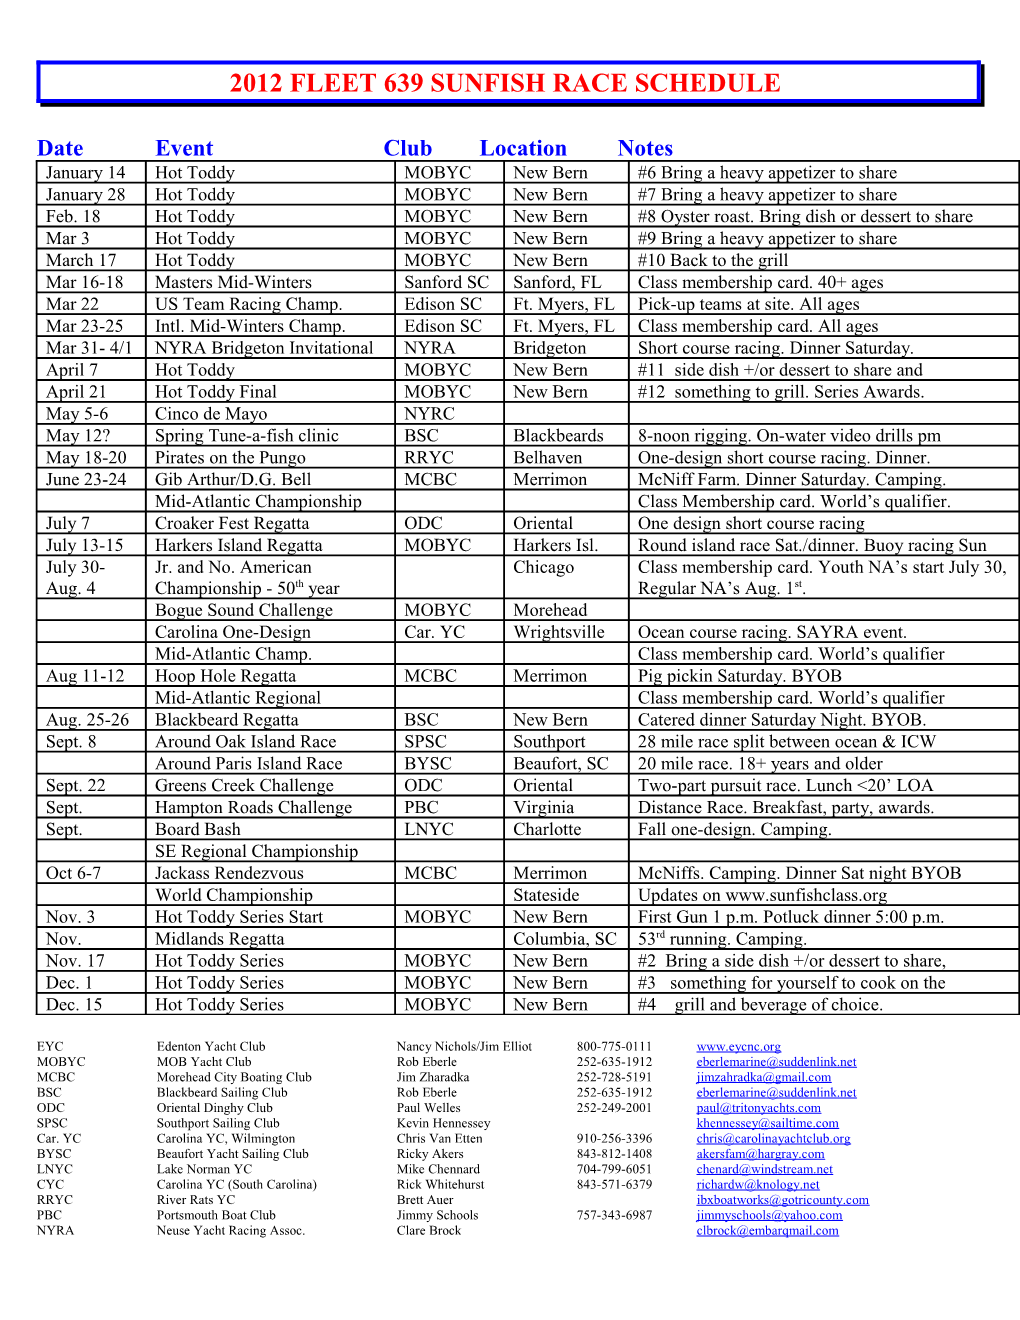 2012 Fleet 639 Sunfish Race Schedule